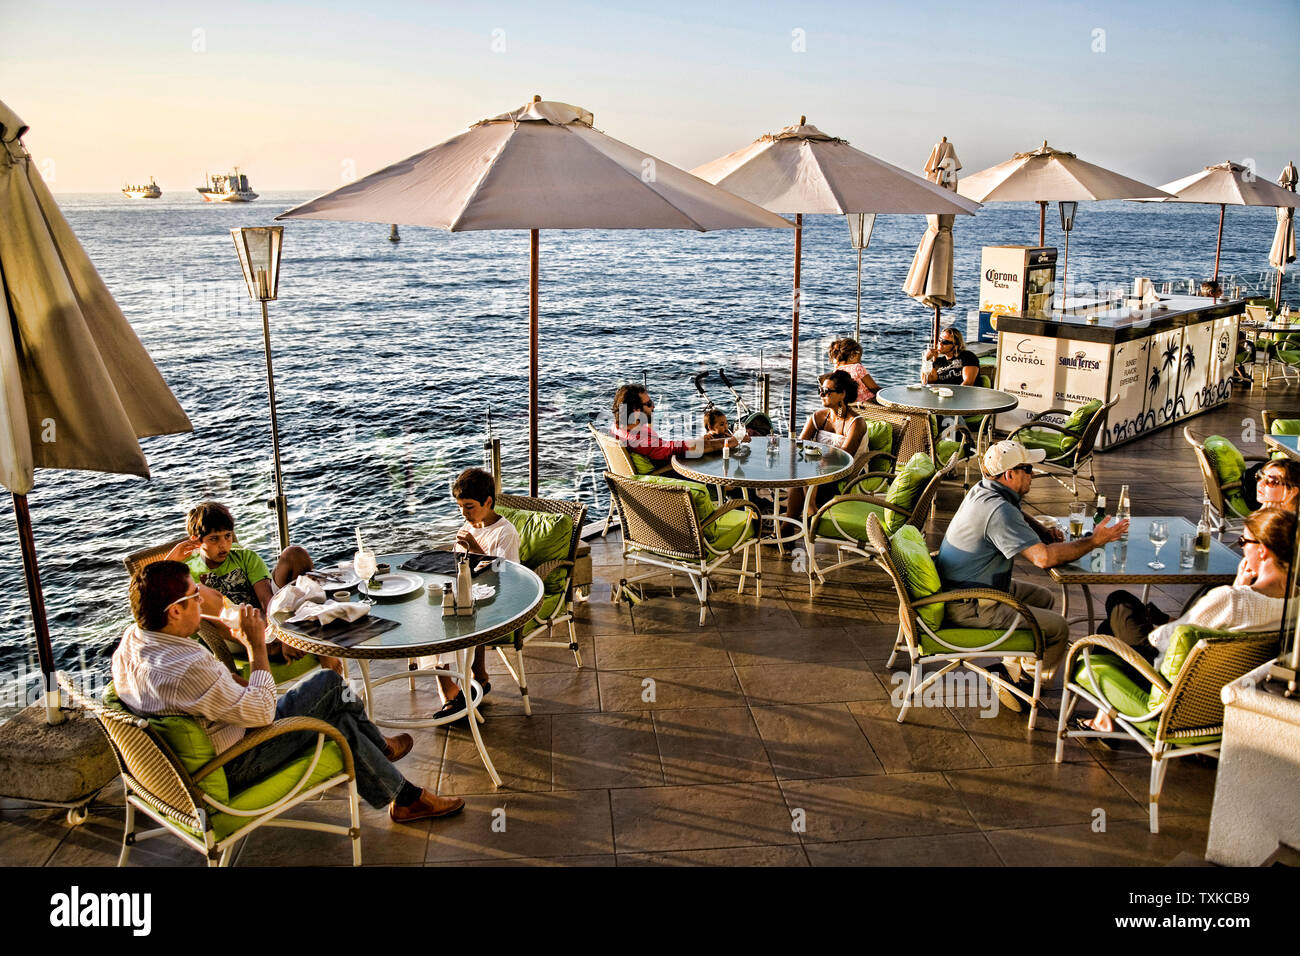 Sheraton hotel terrace overlooking the south Pacific ocean, Vina del Mar, Valparaiso, Chile Stock Photo